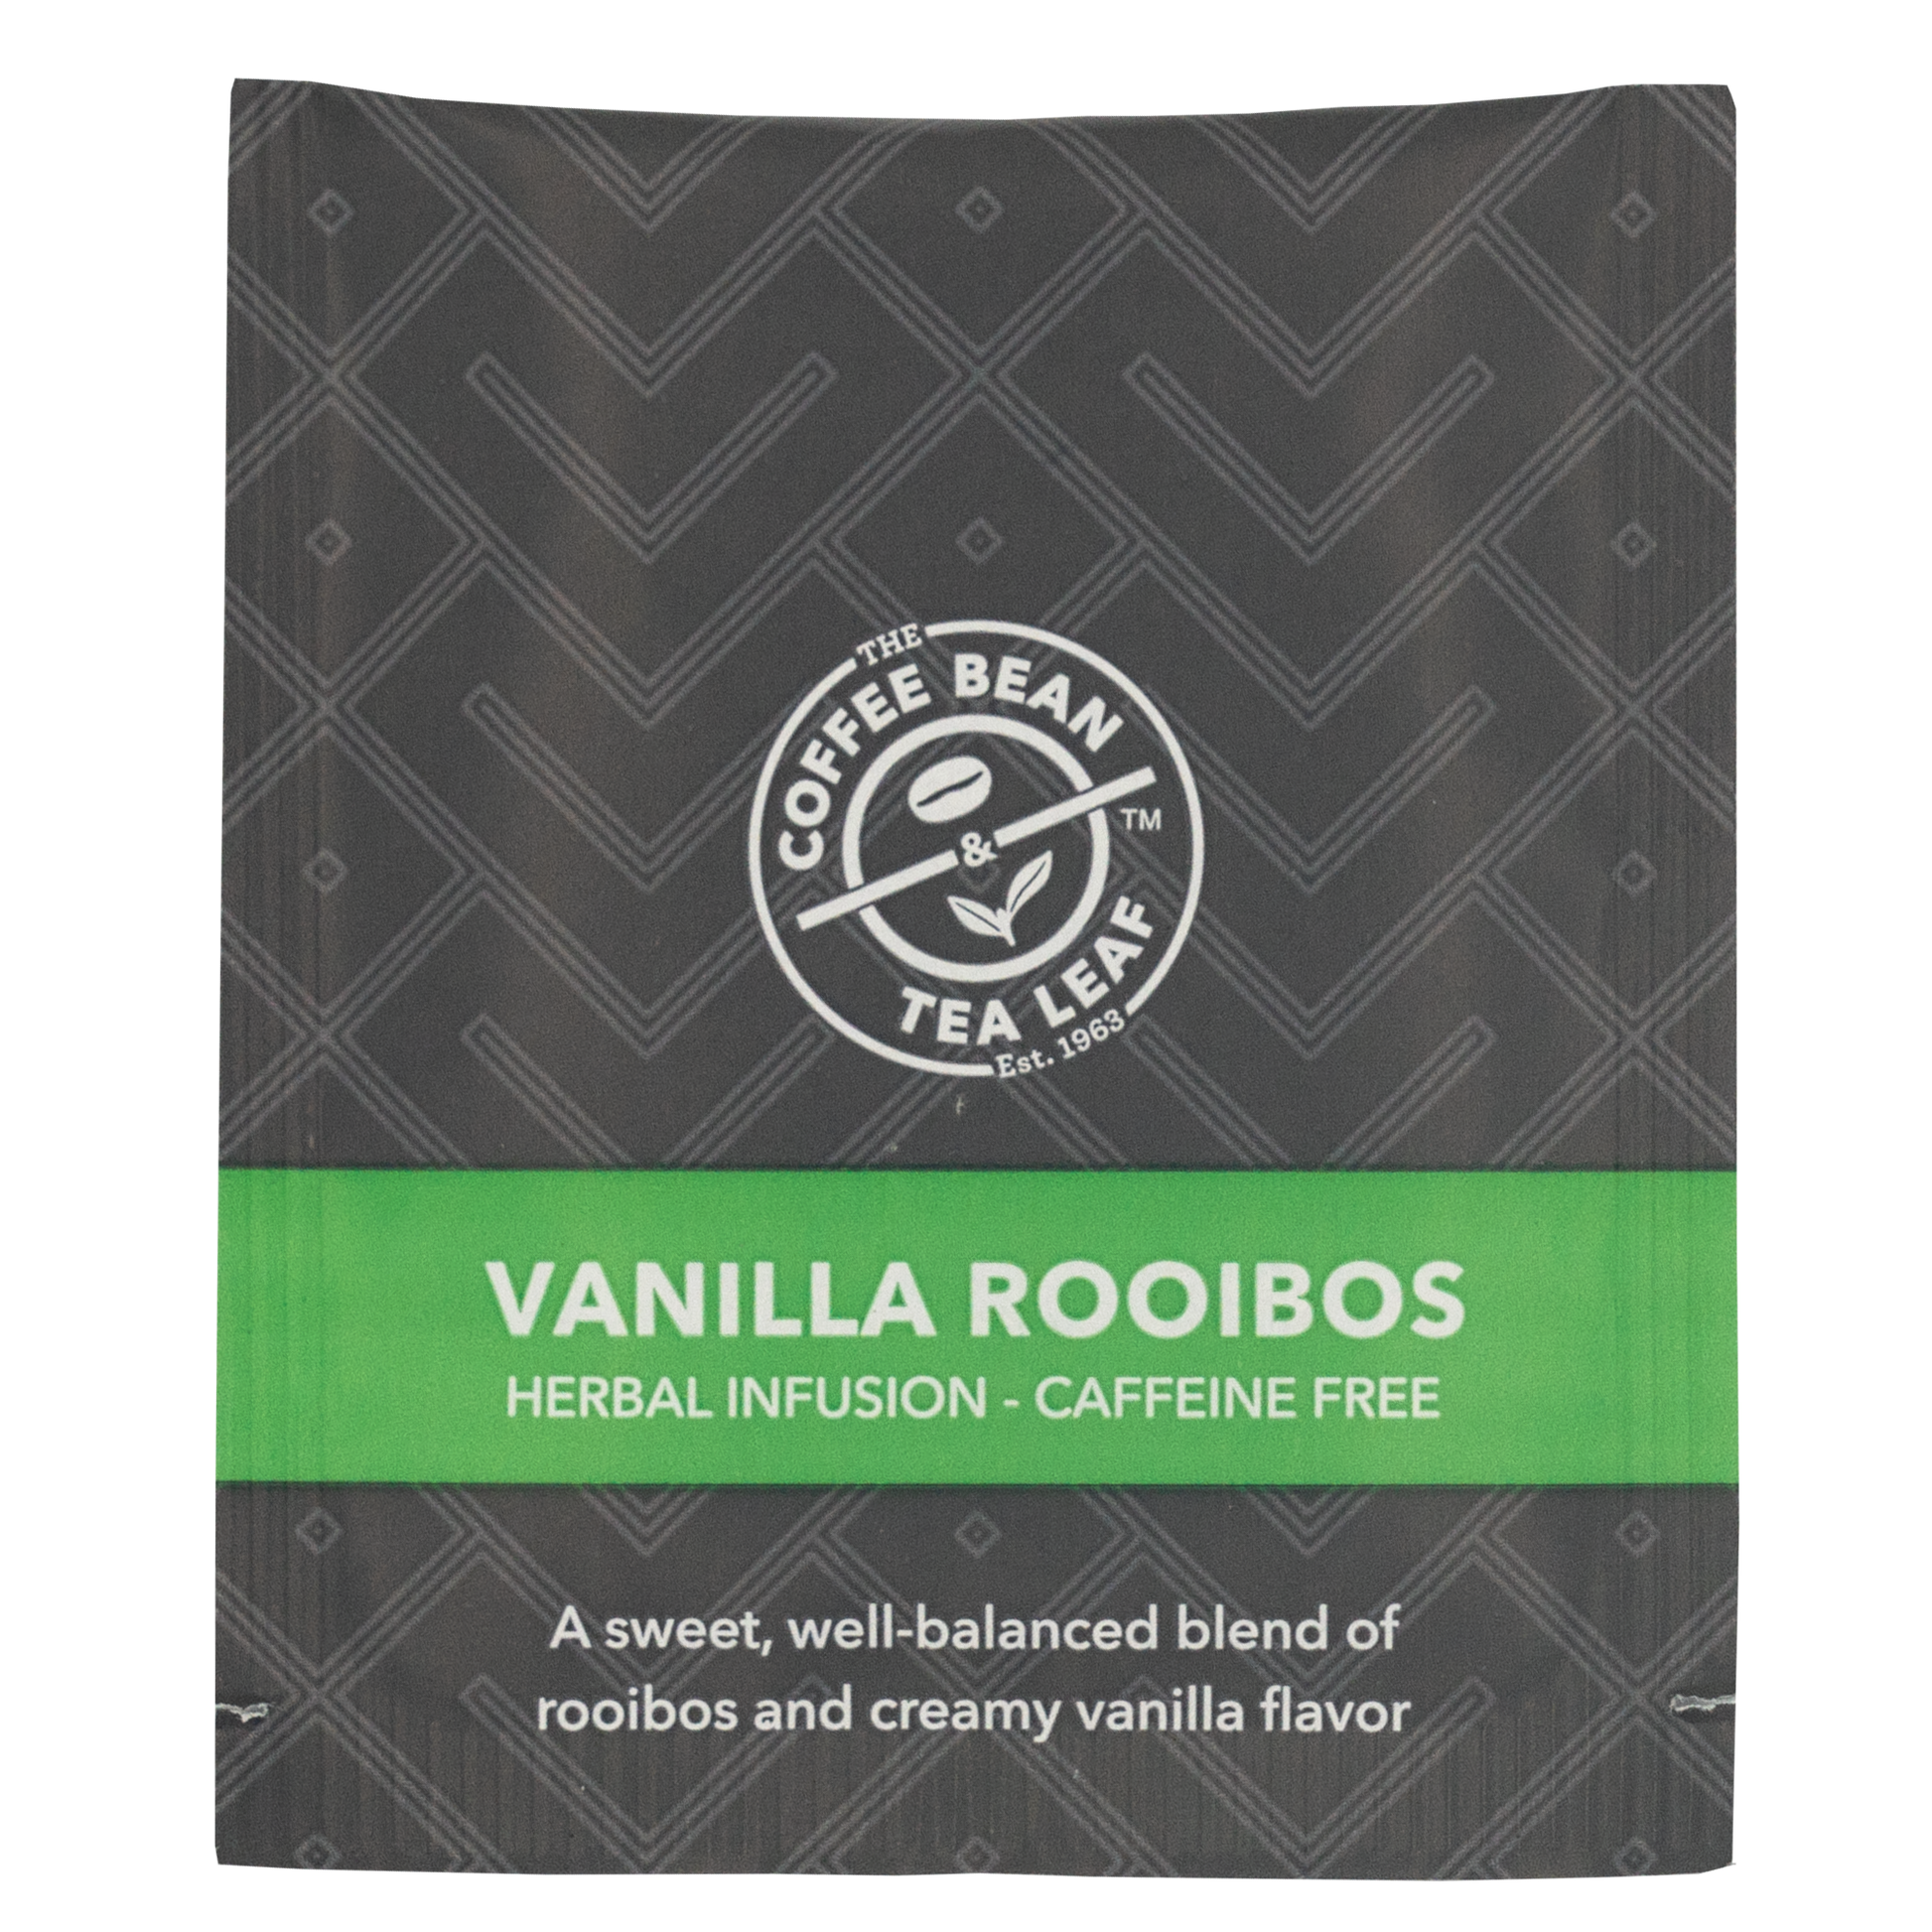 CBTL Vanilla Rooibos Tea Bag